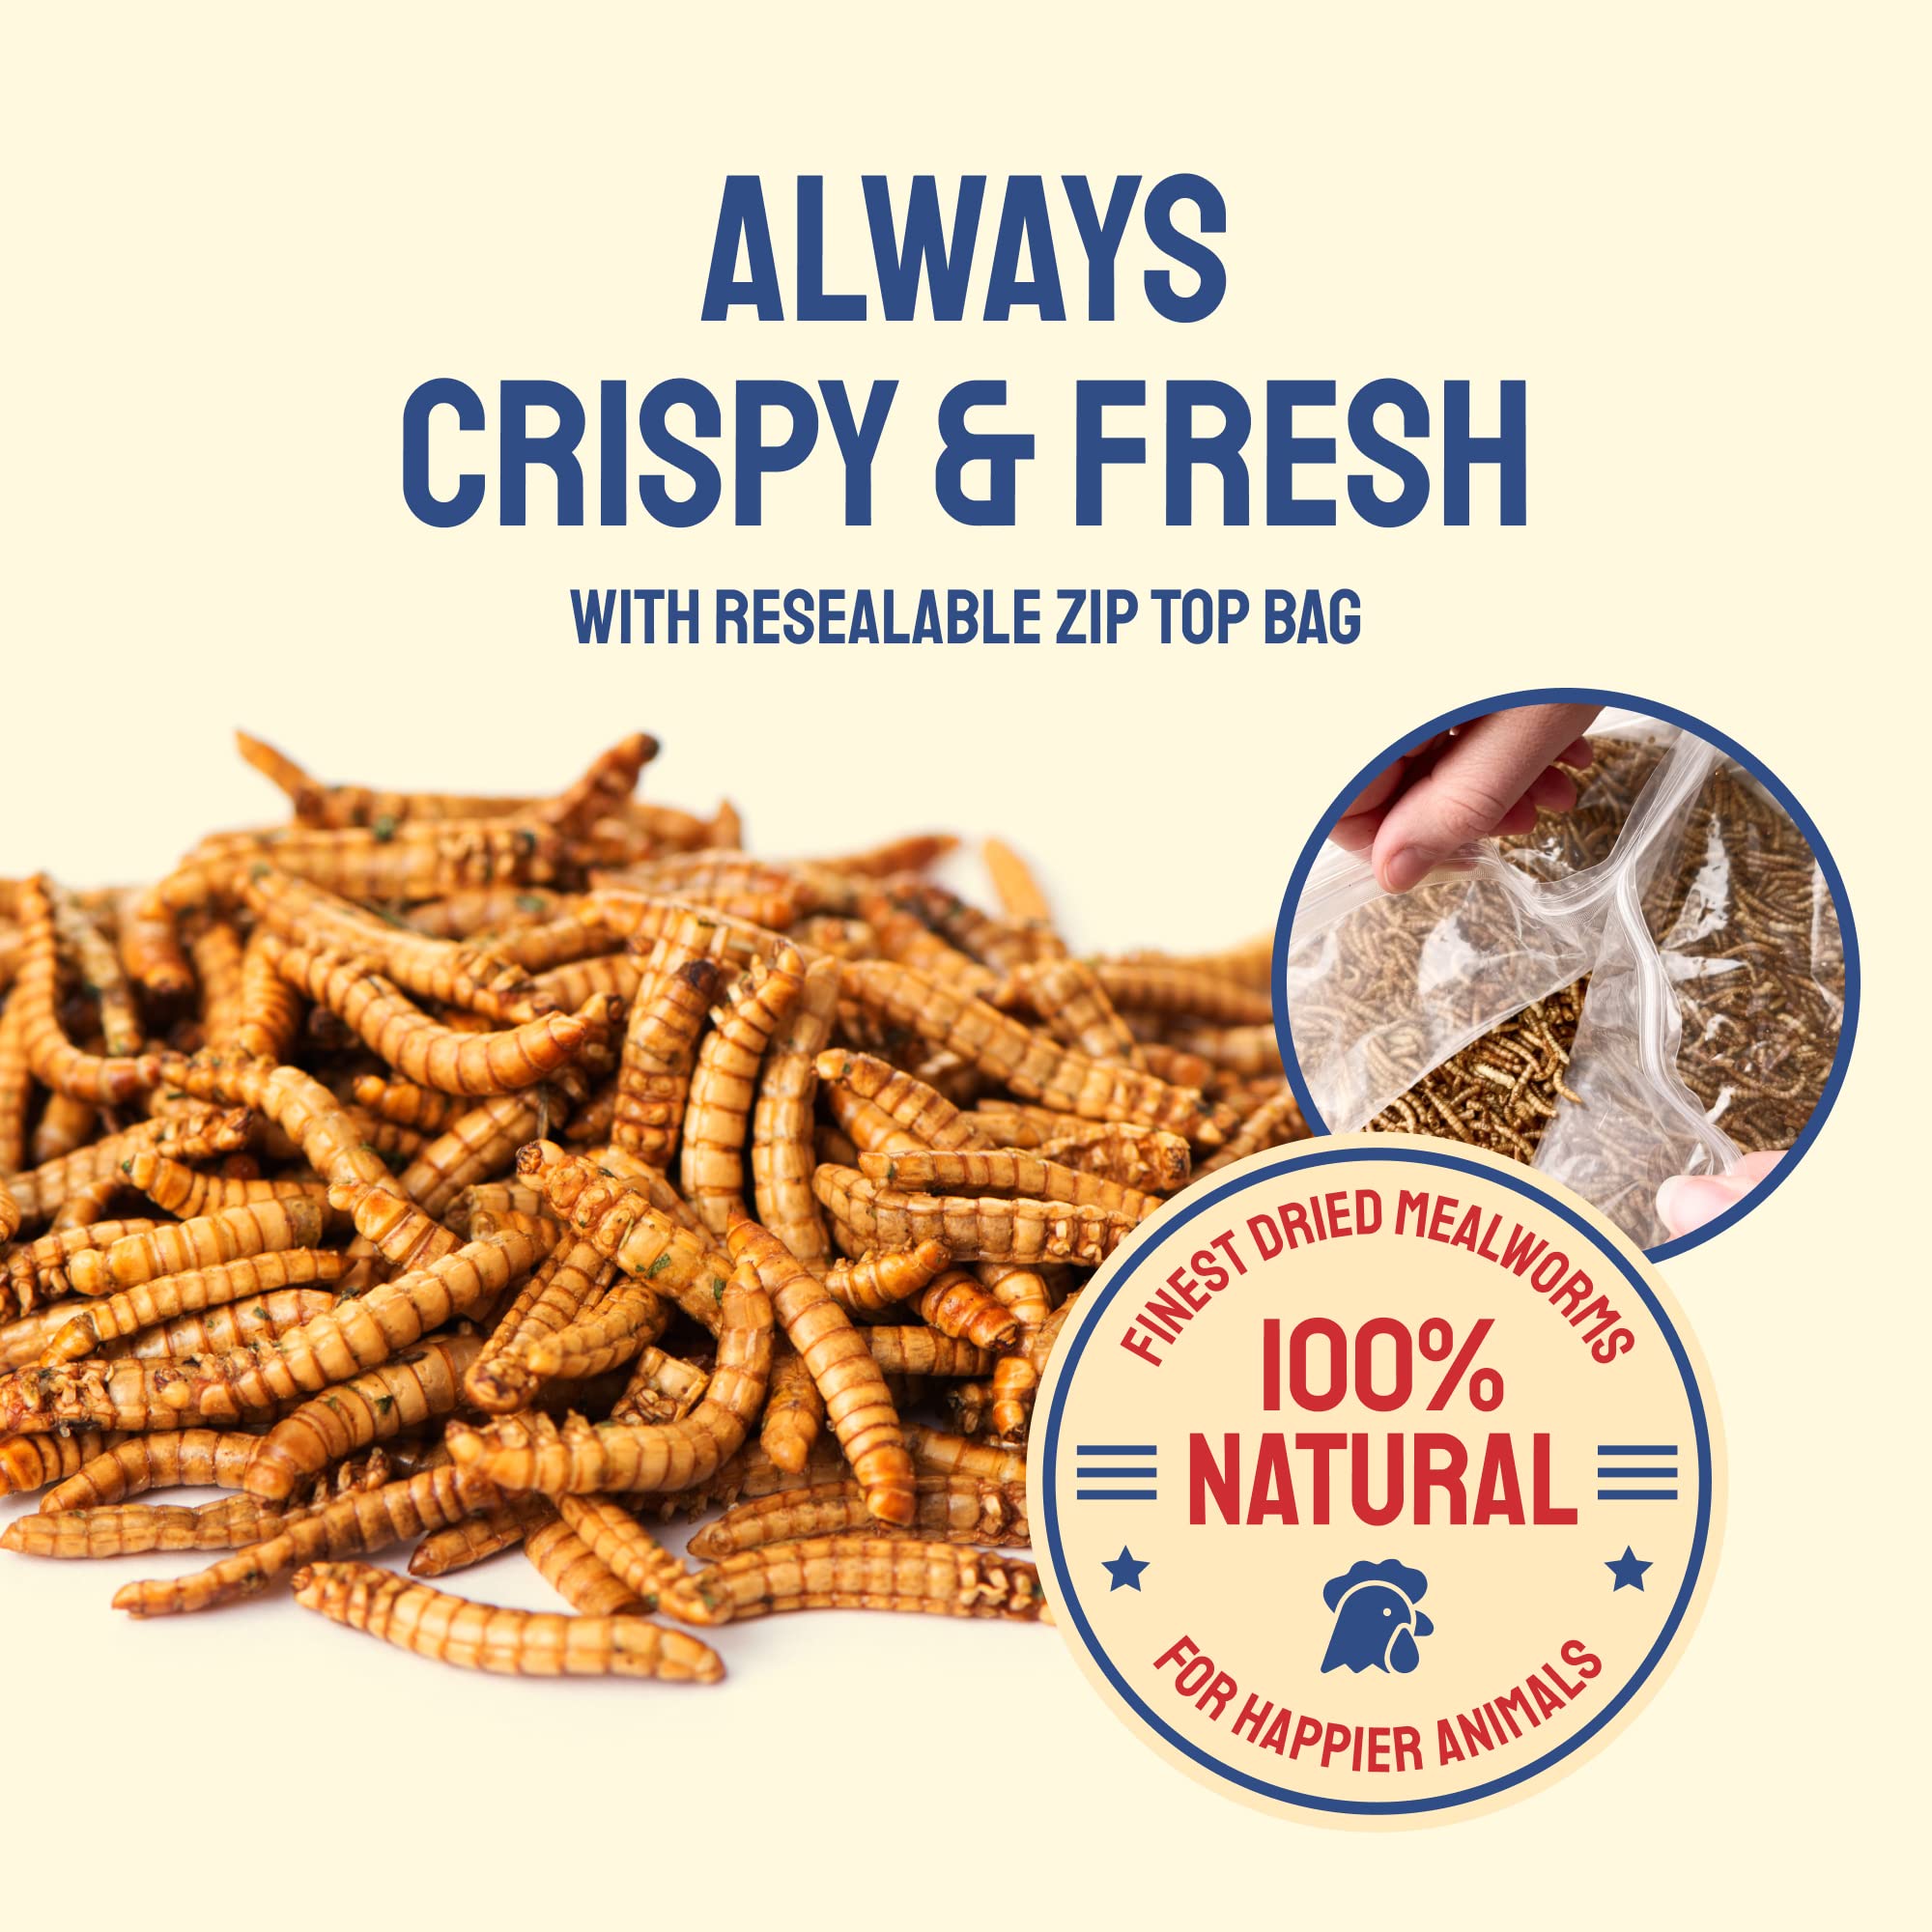 Hatortempt 10lbs Bulk Non-GMO Dried Mealworms 47.99 w/ Prime S&S